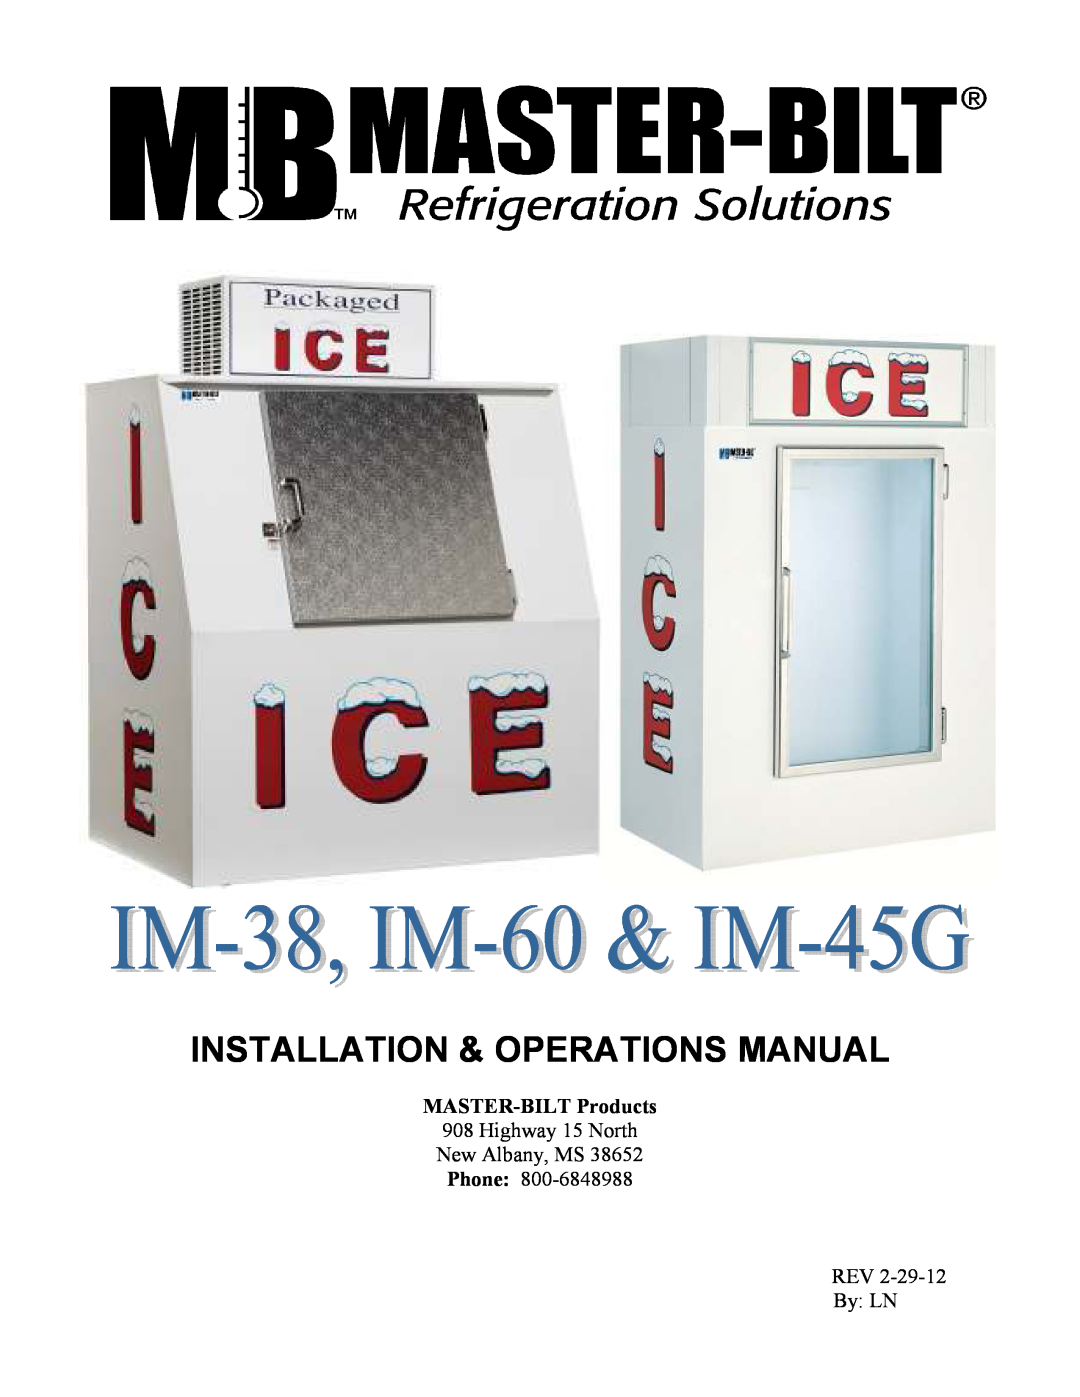 Master Bilt IM-60, IM-45G manual Installation & Operations Manual, MASTER-BILTProducts 